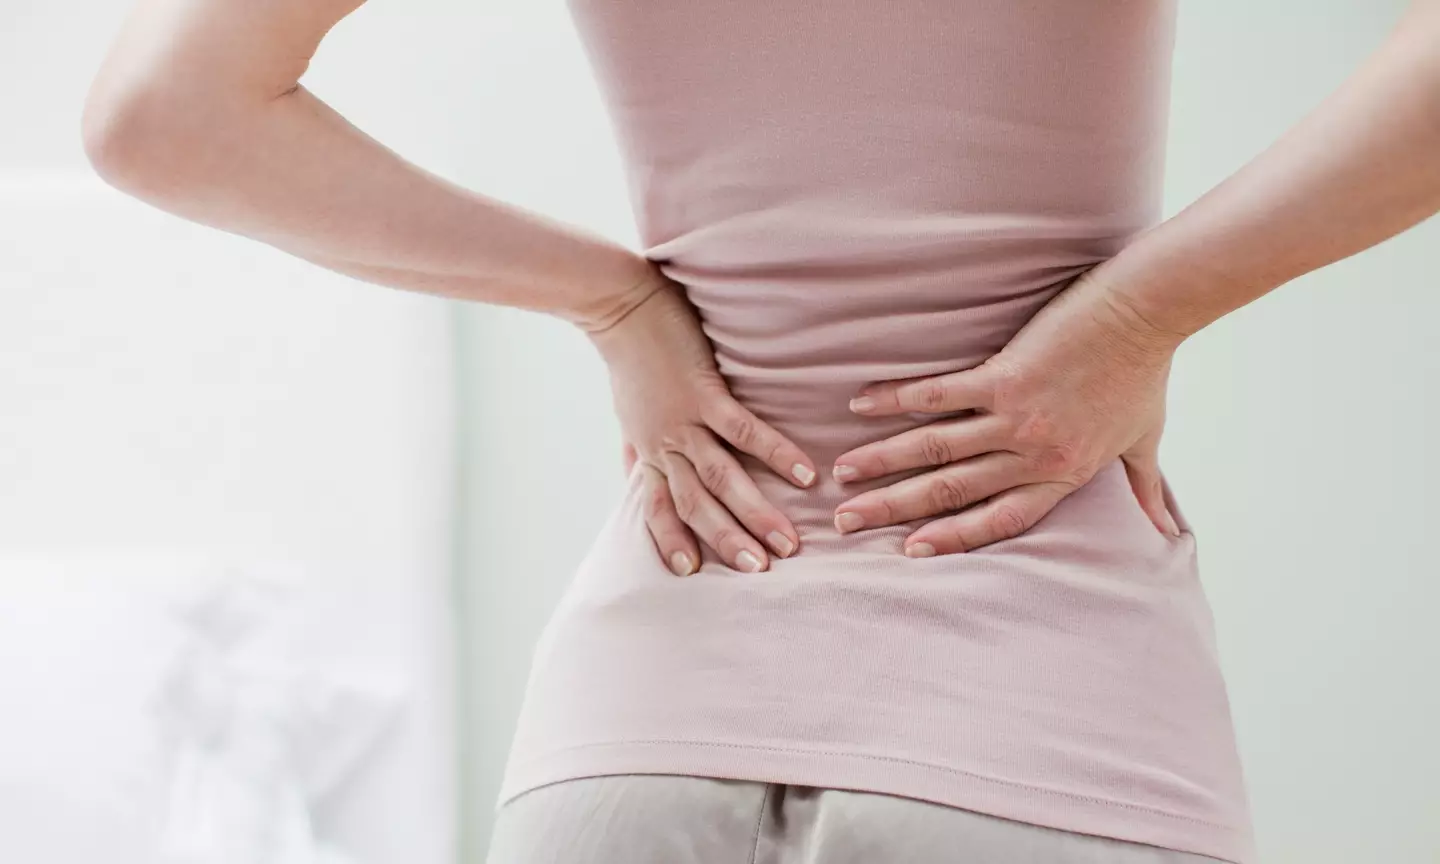 Back pain impacts millions worldwide.